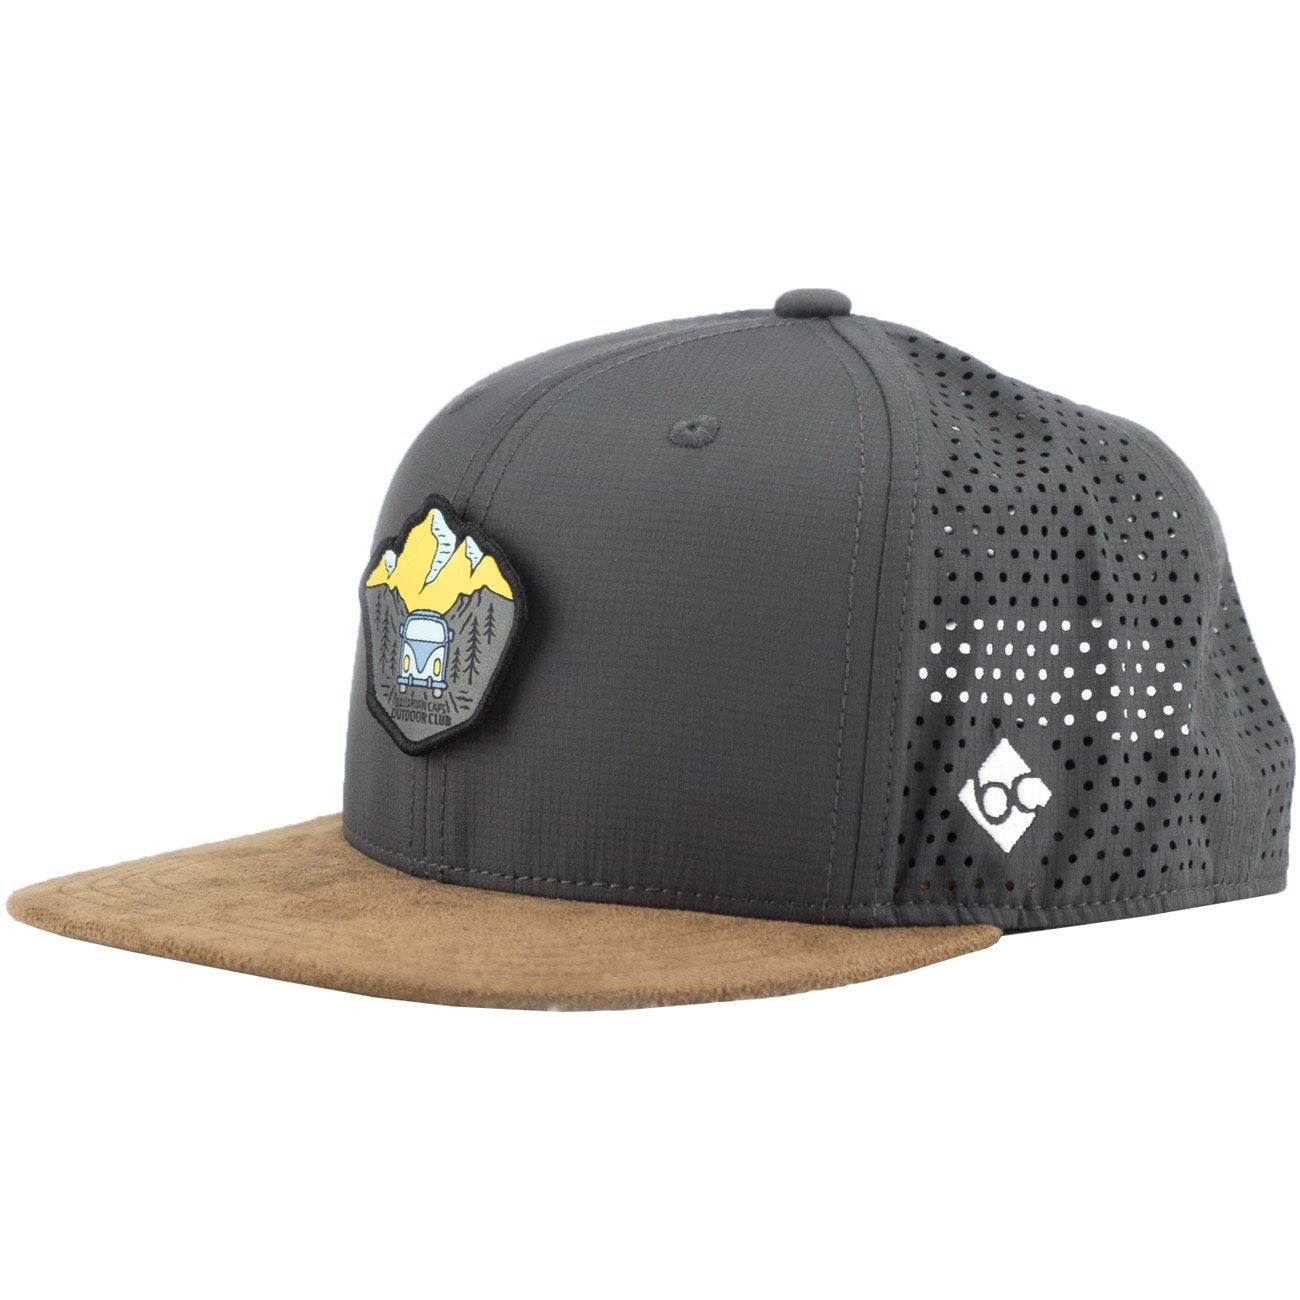 Outdoor BC Club Bavarian Baseball Cap Caps